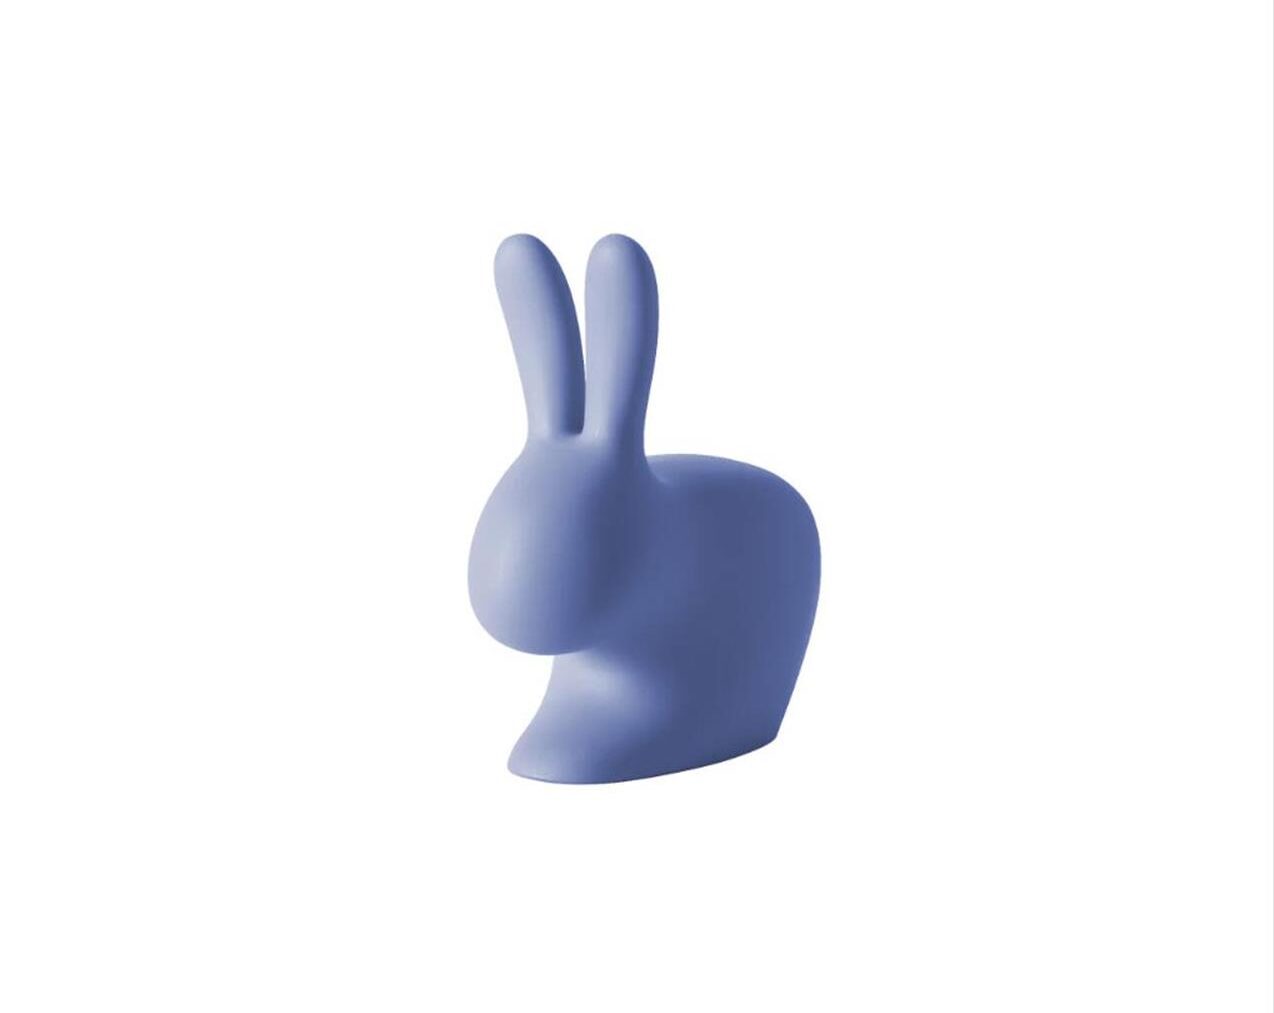 Rabbit-Chair-Baby-Light-Blue